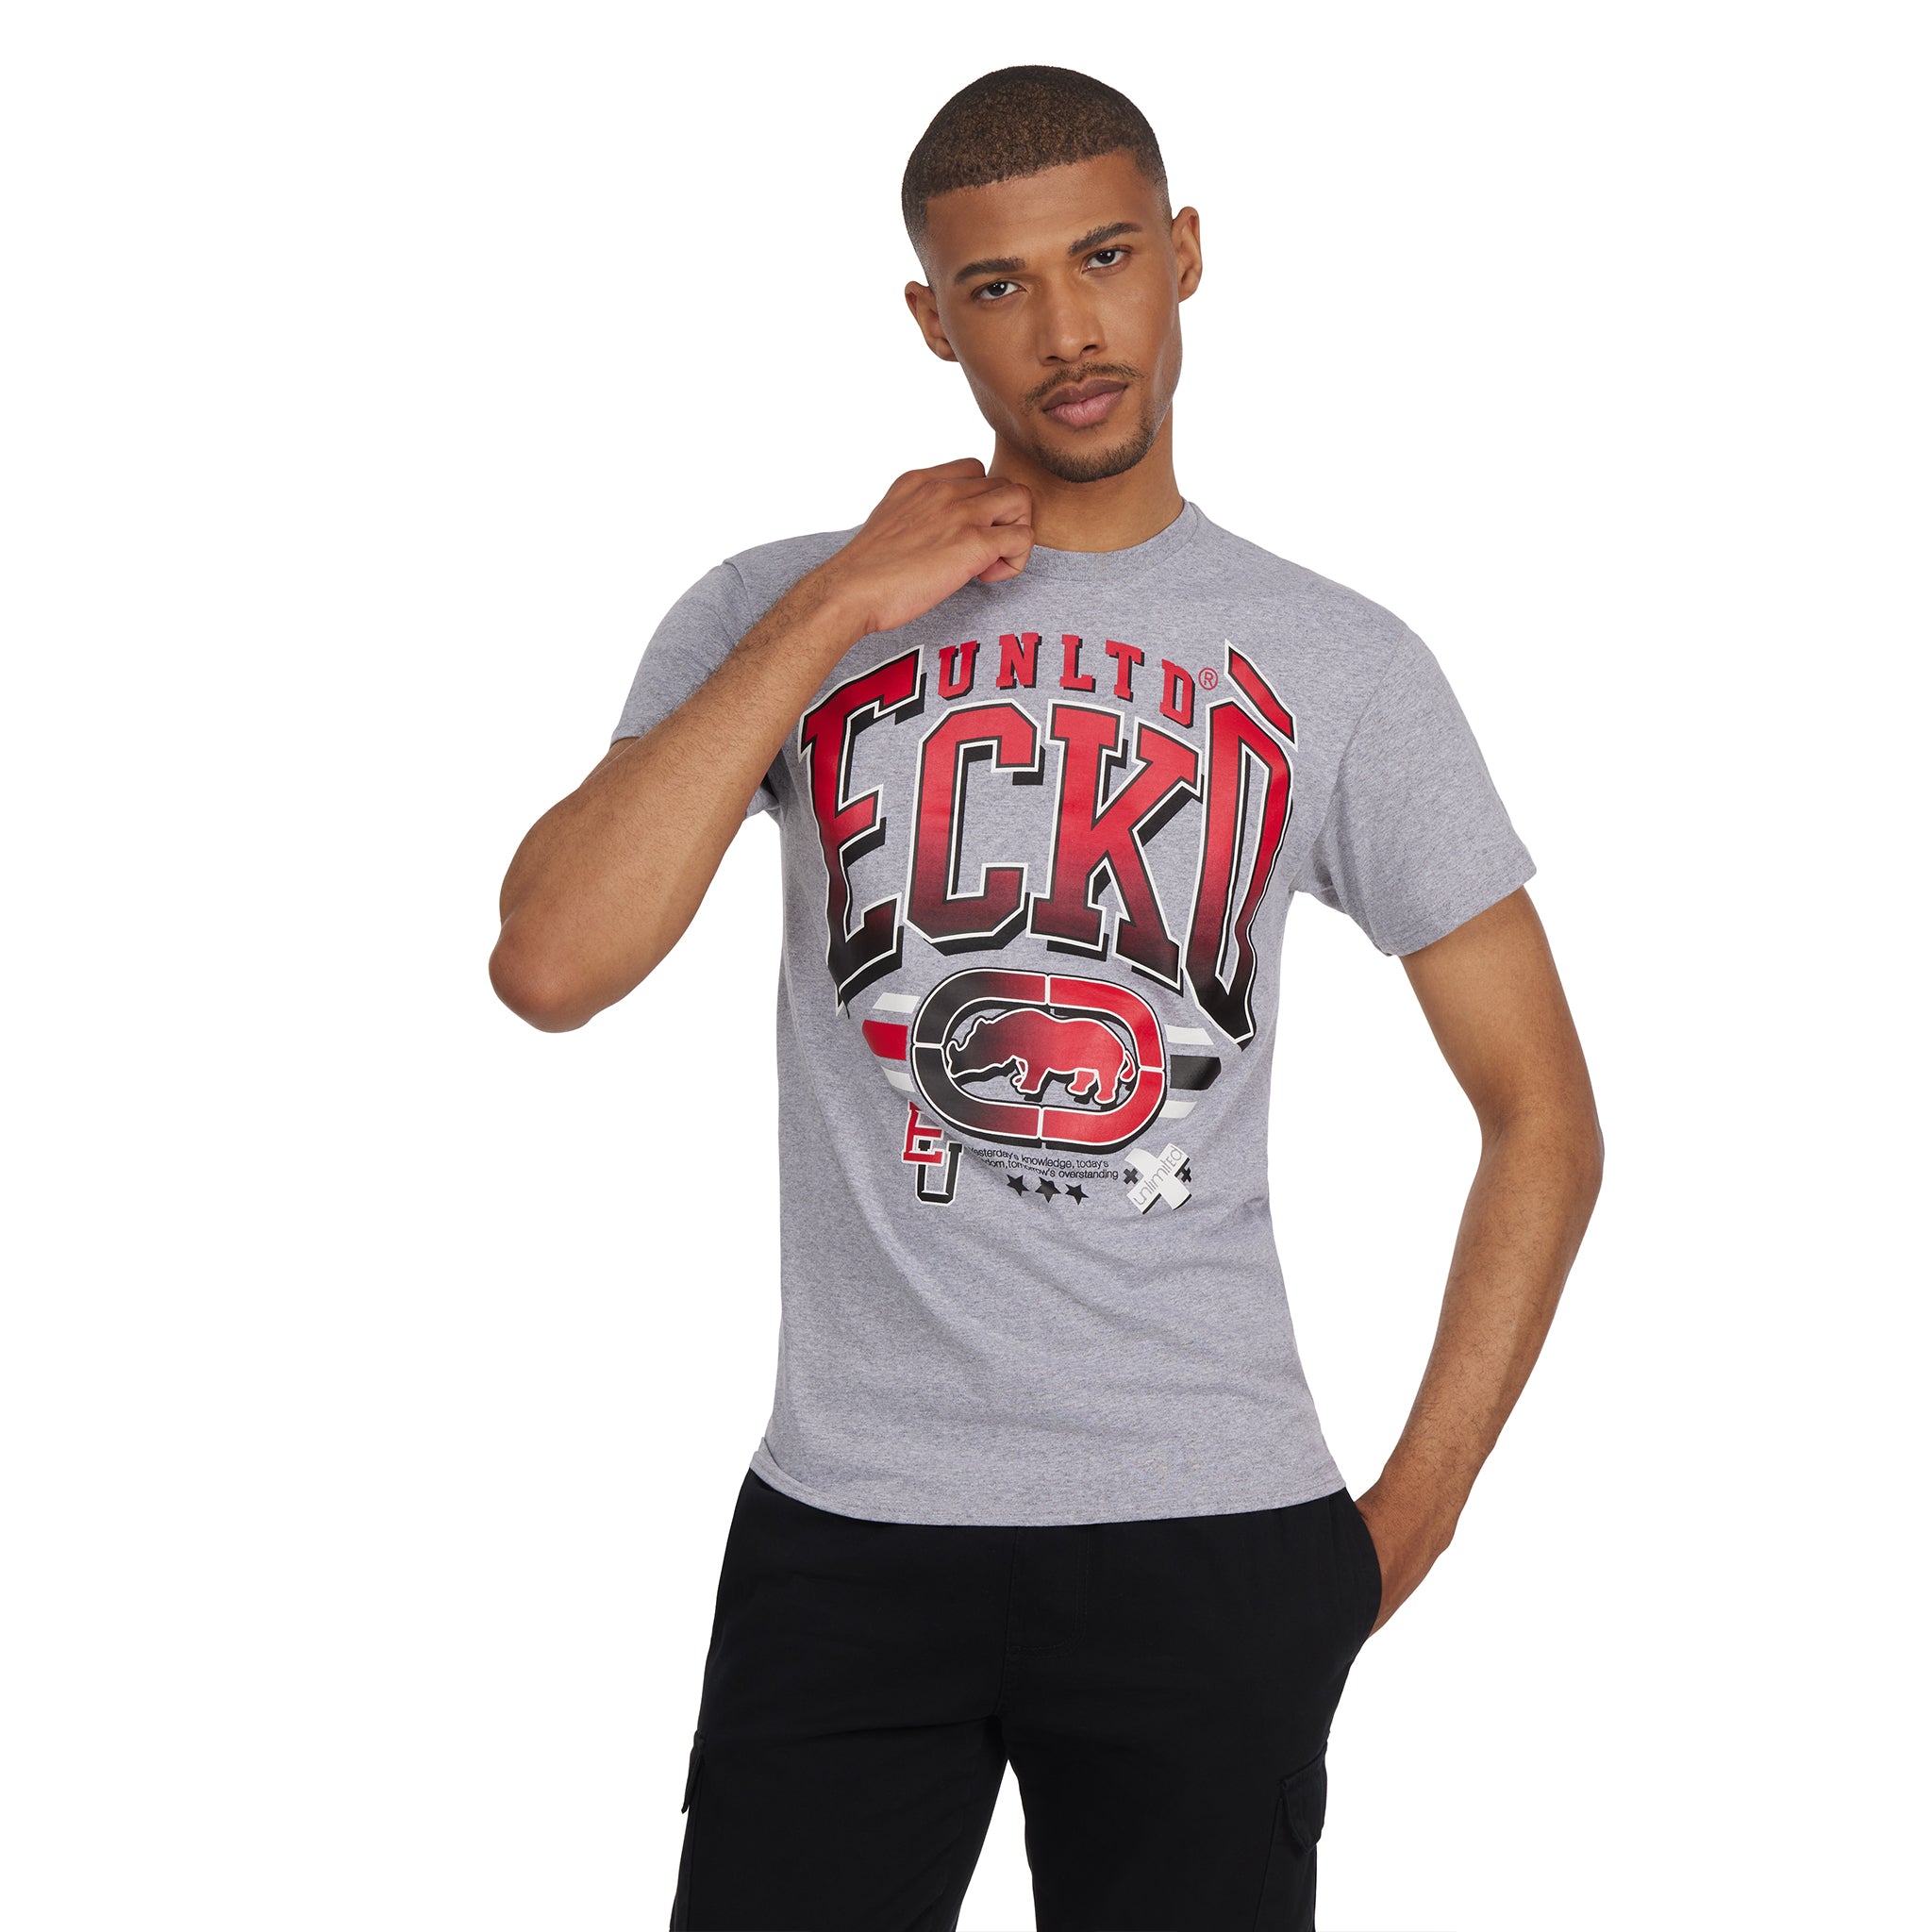 Men's T-Shirts | V-Neck, Crew Neck, Hoodies | ECKO UNLTD.